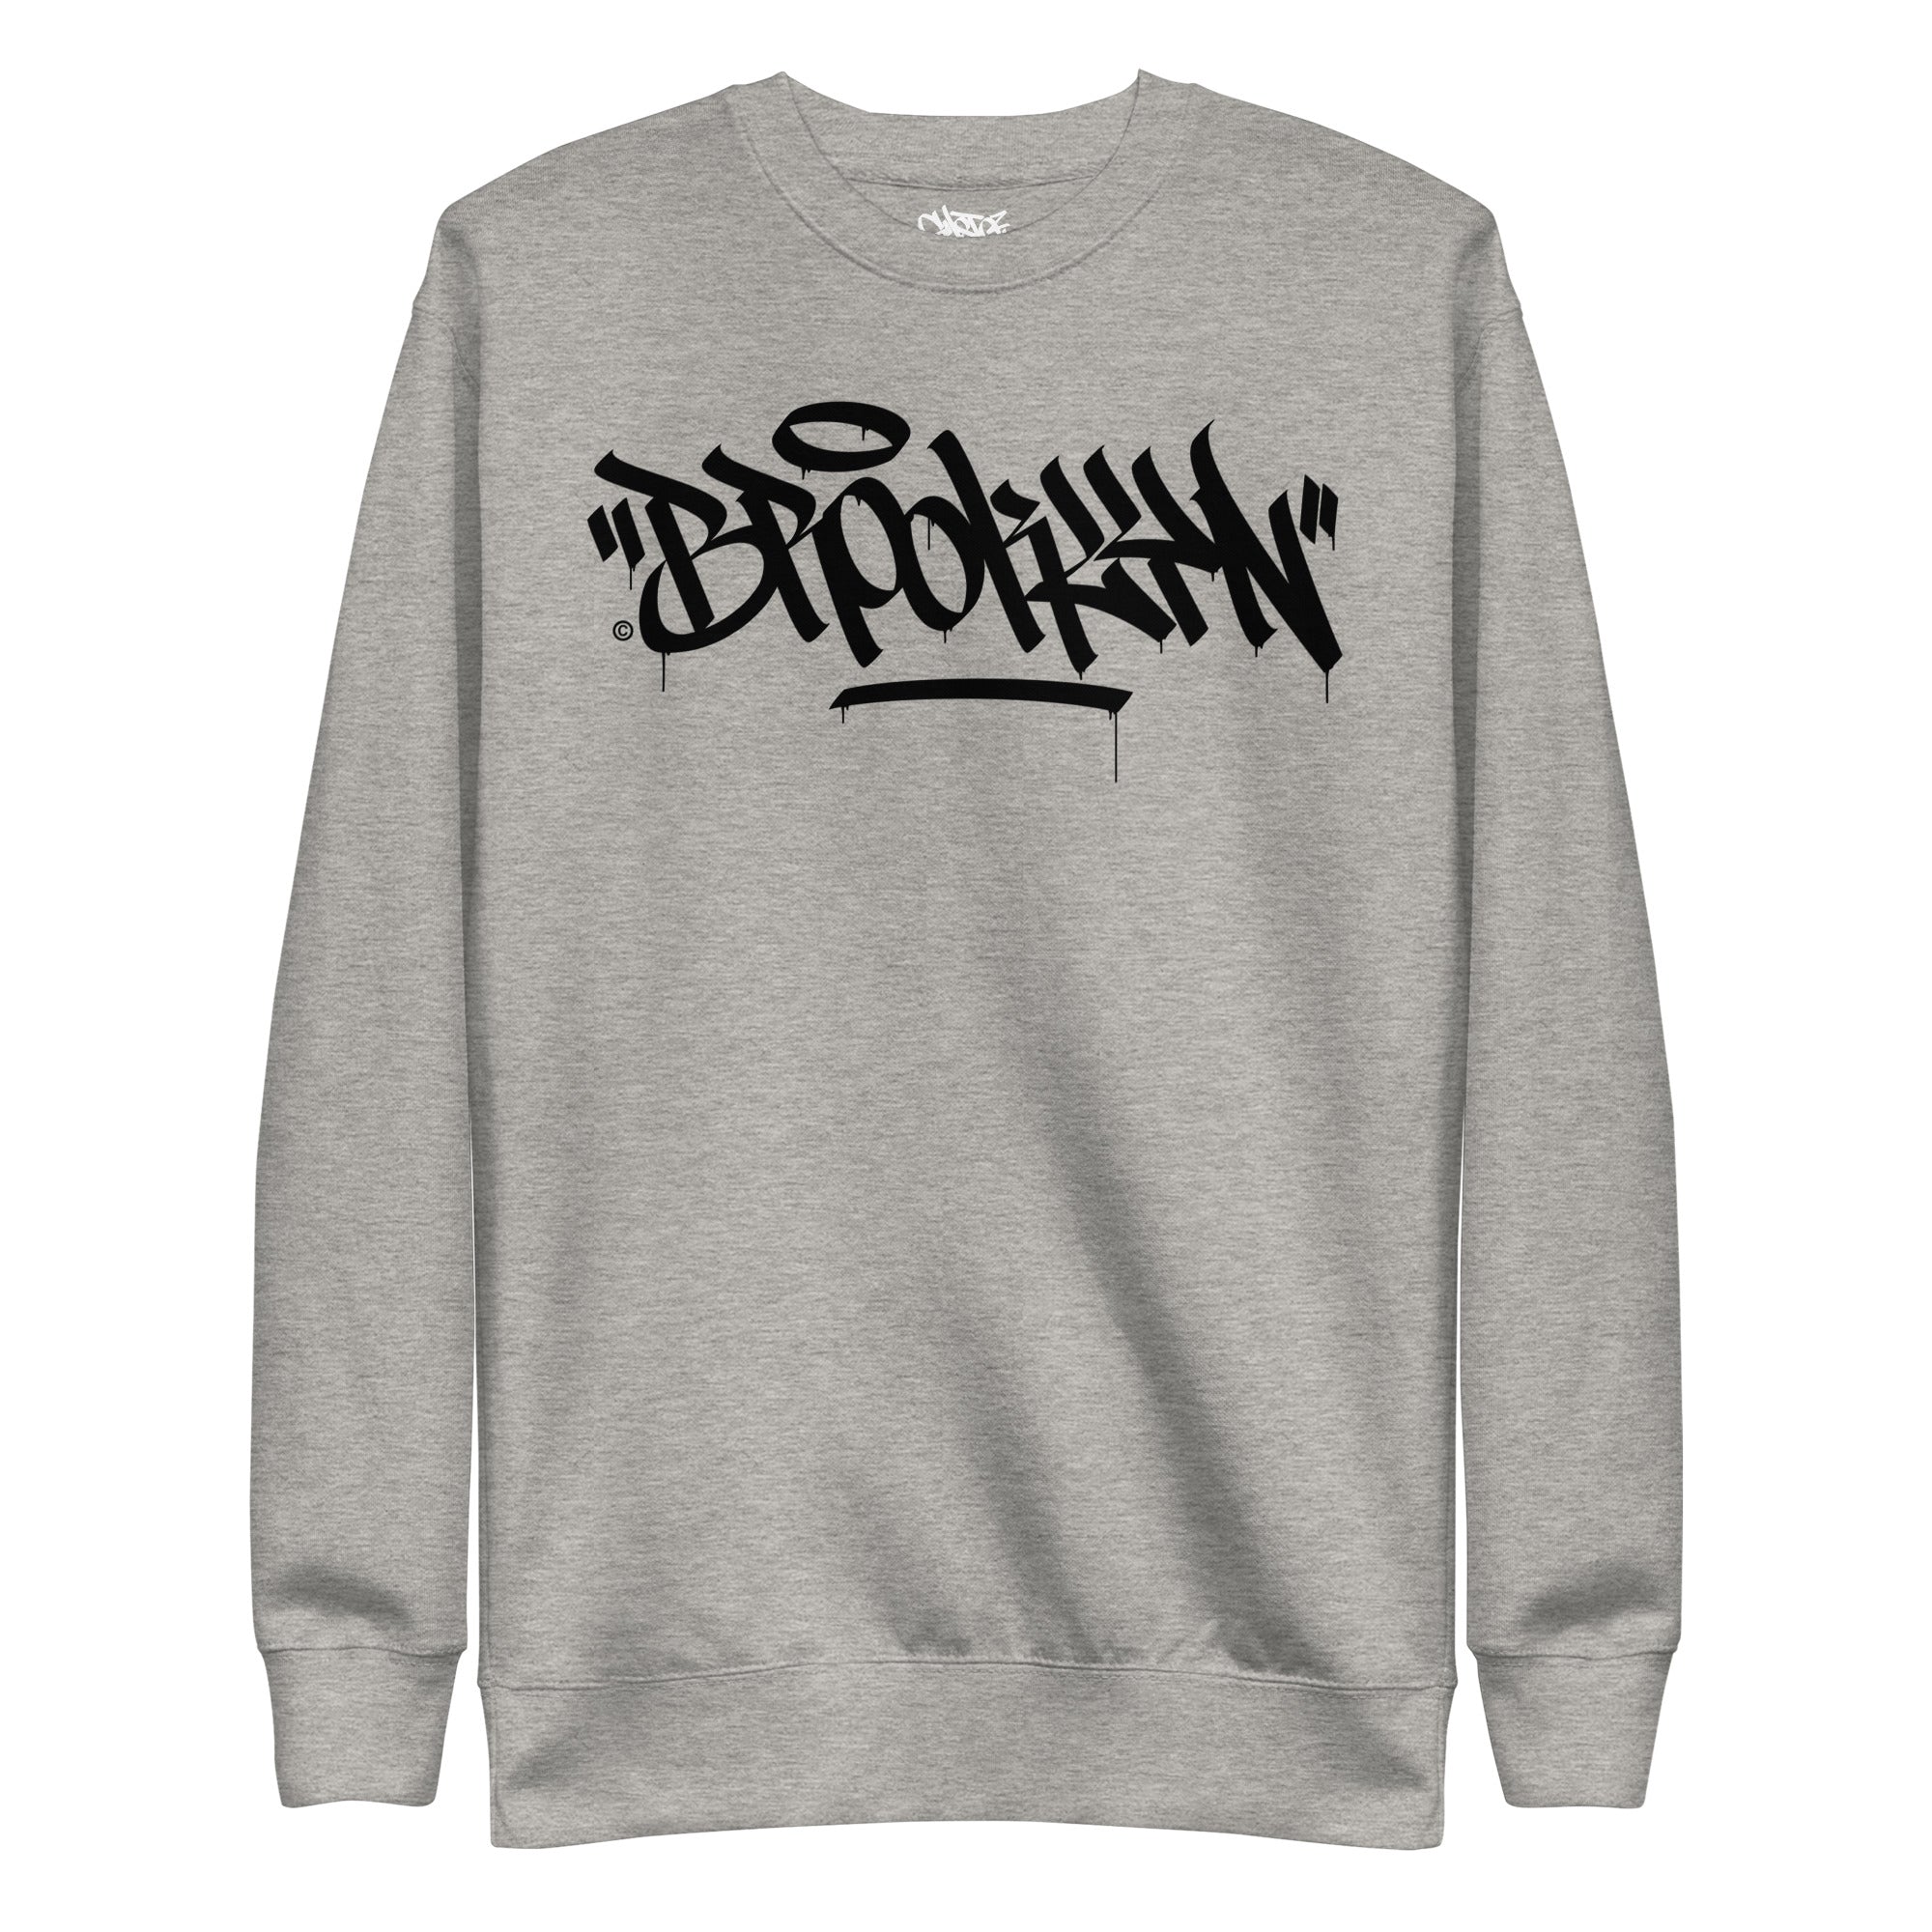 "Brooklyn" Graffiti Handtyle - Unisex Premium Sweatshirt